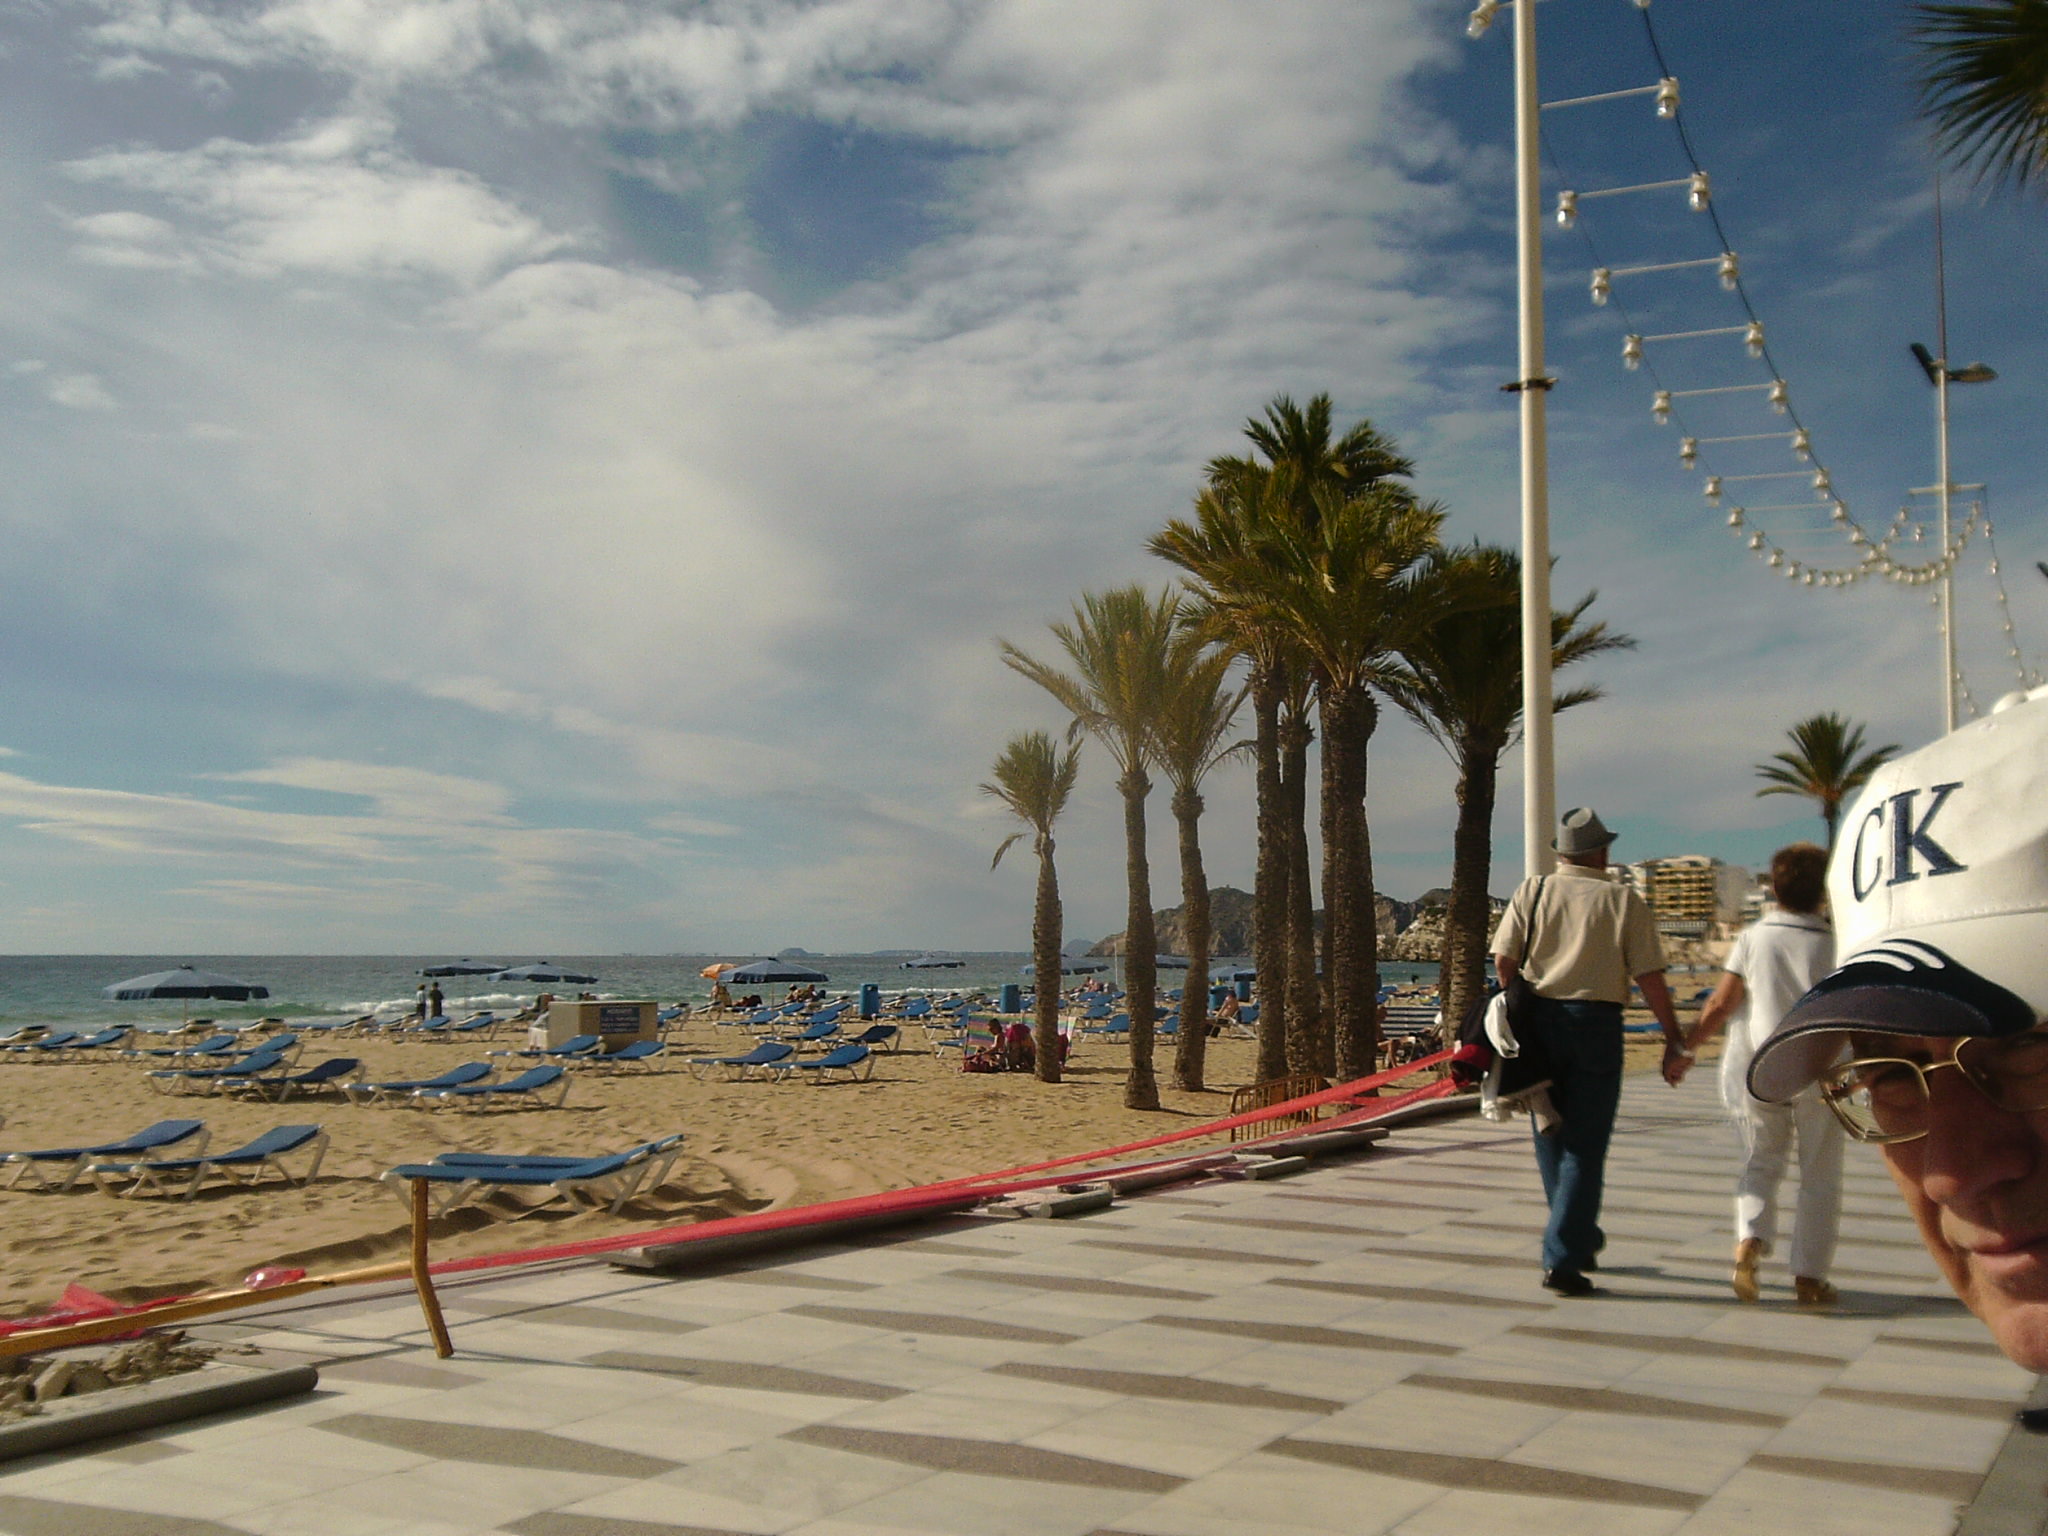 The promenade in Spain.